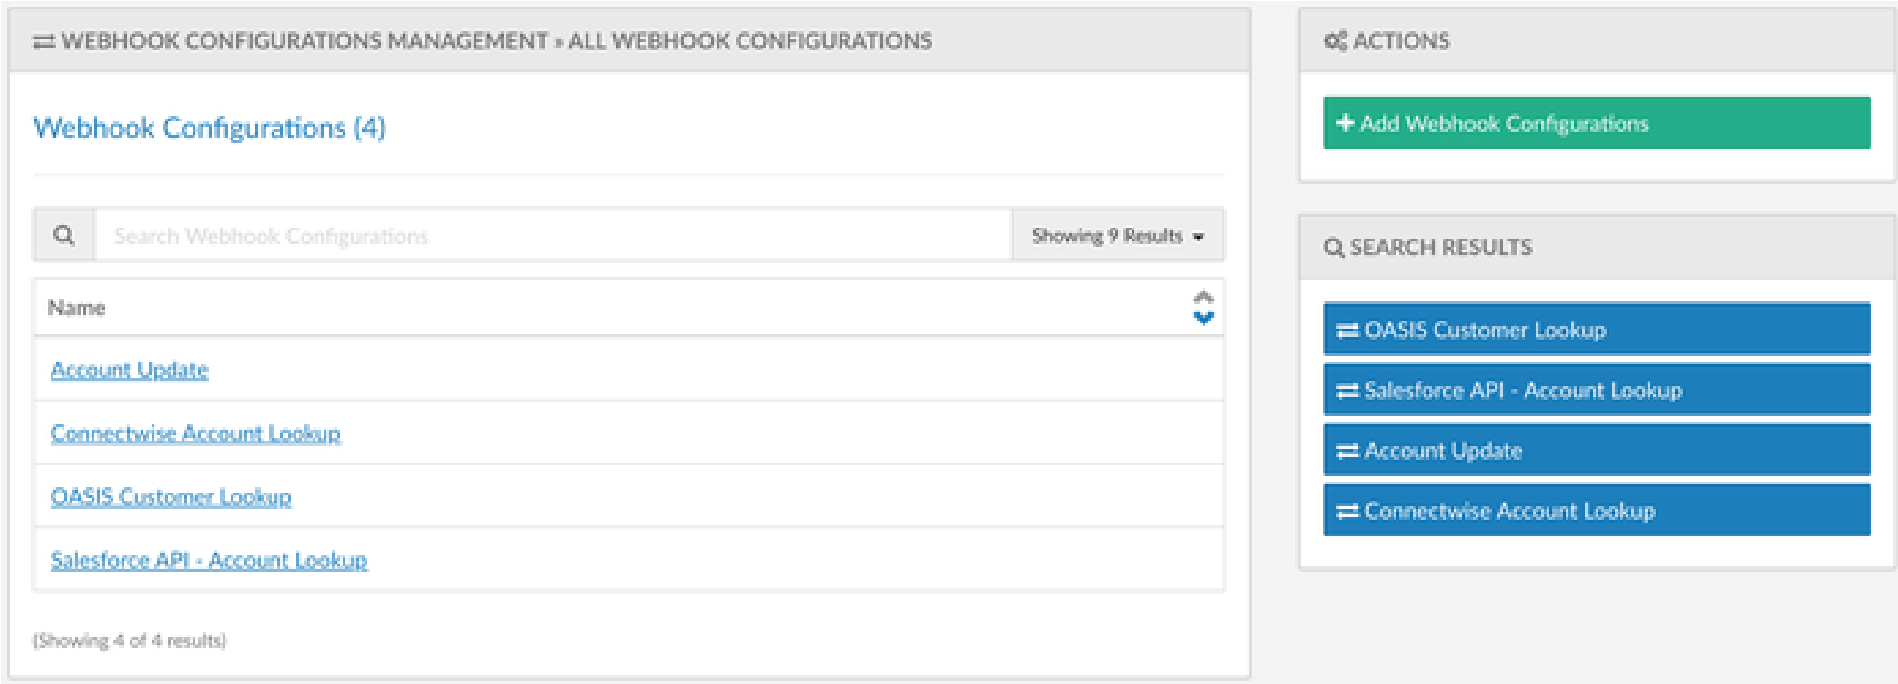 Figure 01 Webhook Configurations Management